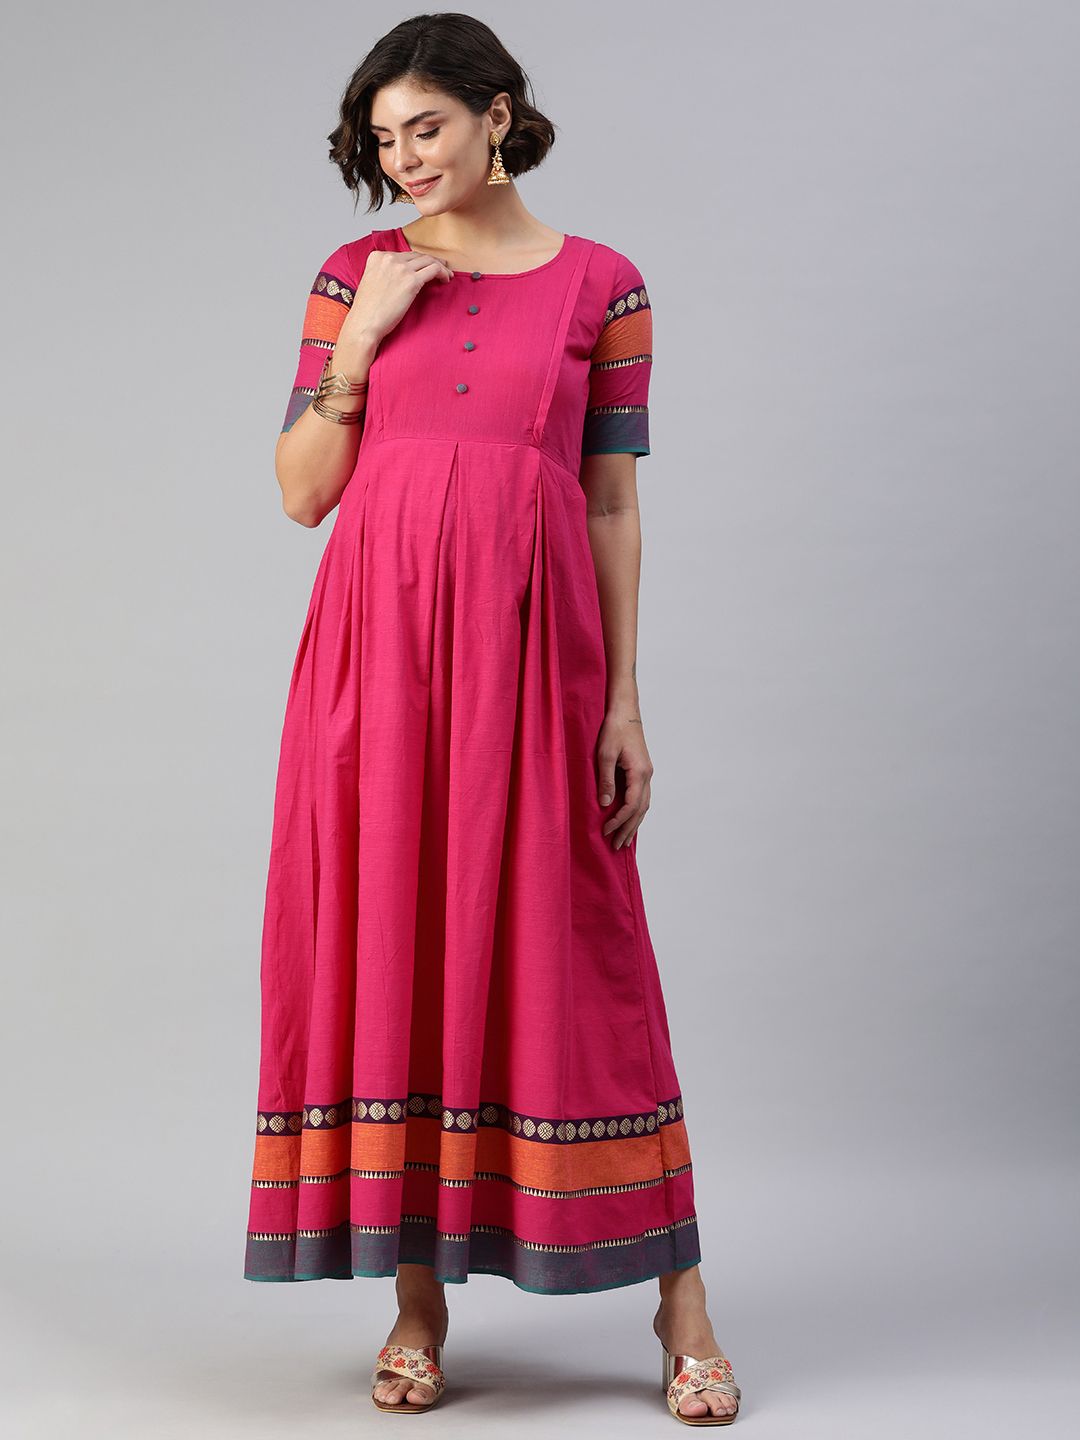 Swishchick Fuchsia Pink Solid Maternity Maxi Dress Price in India